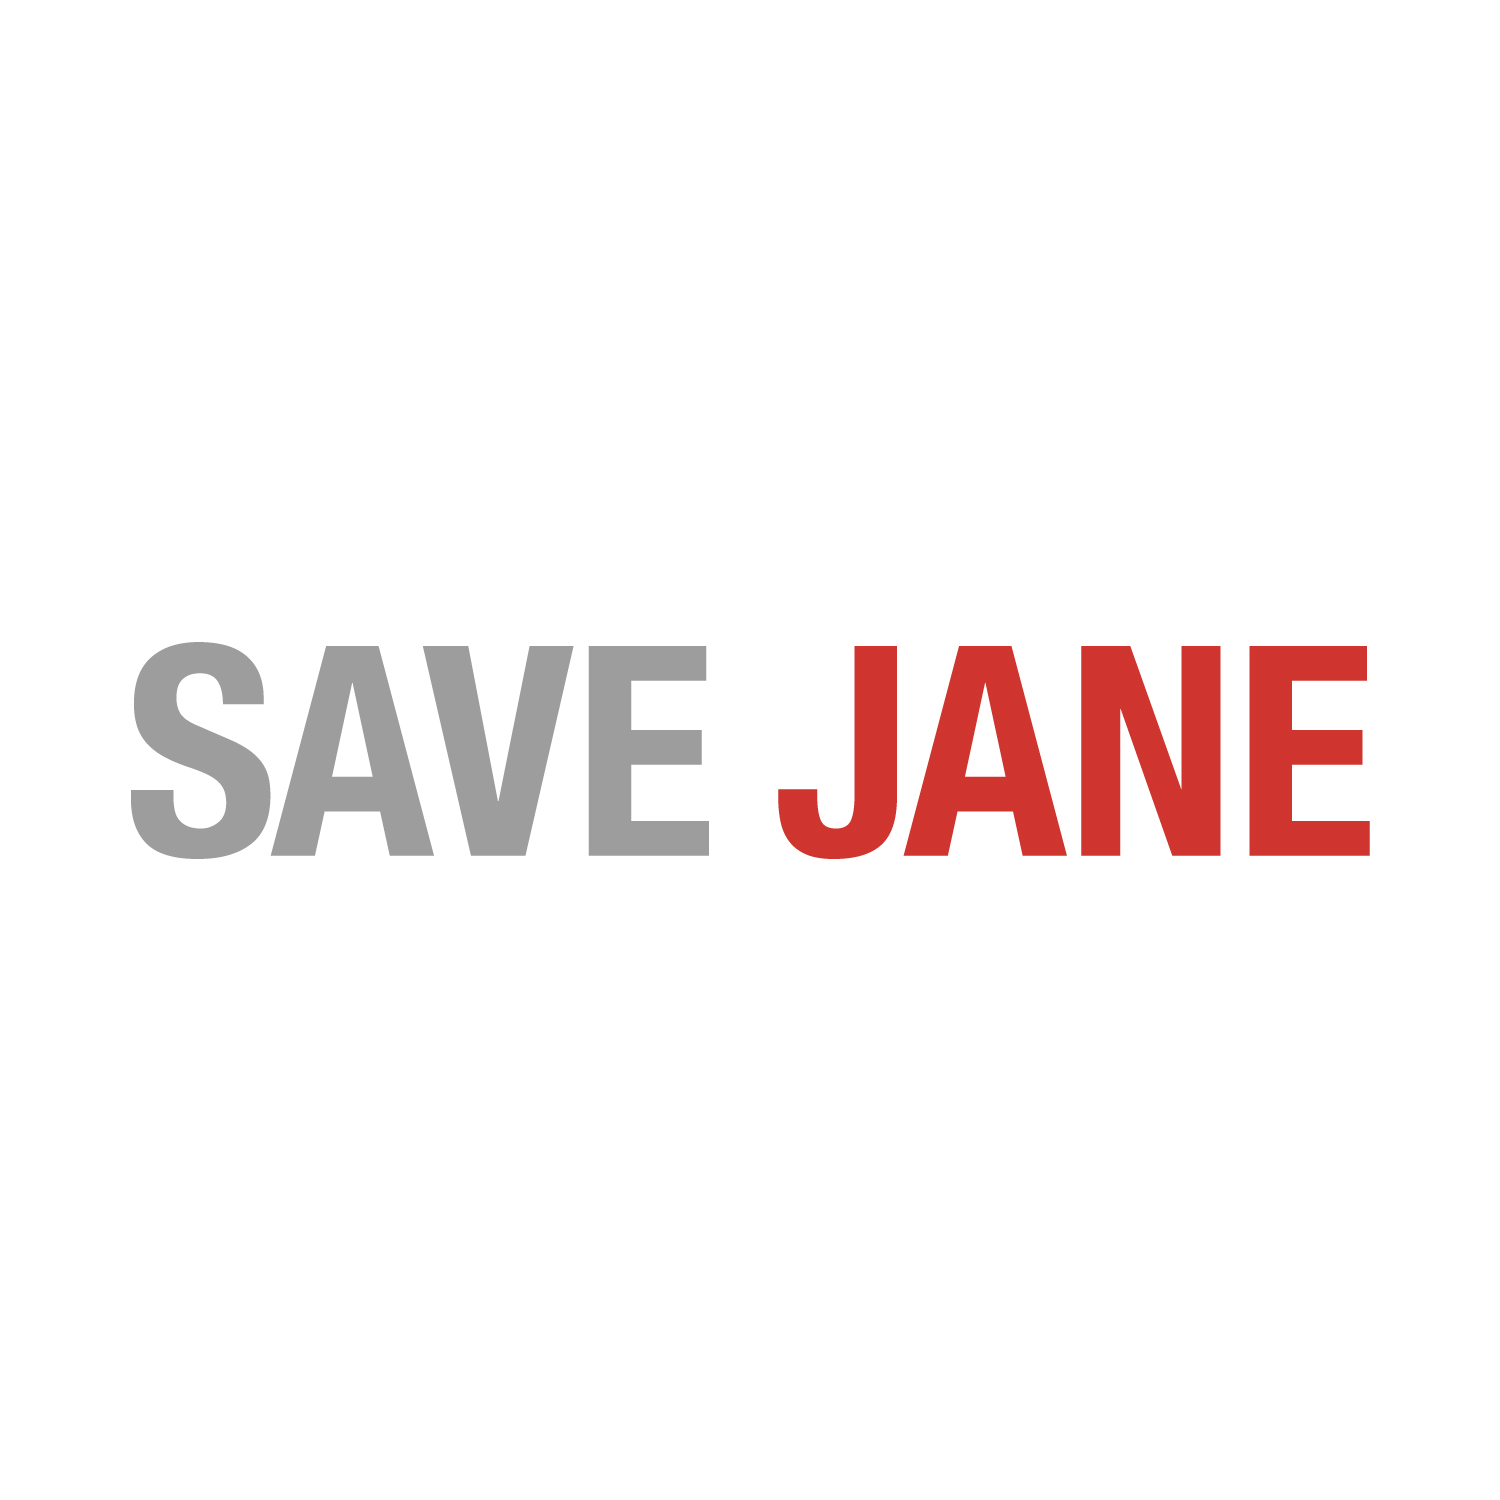 SAVE Jane